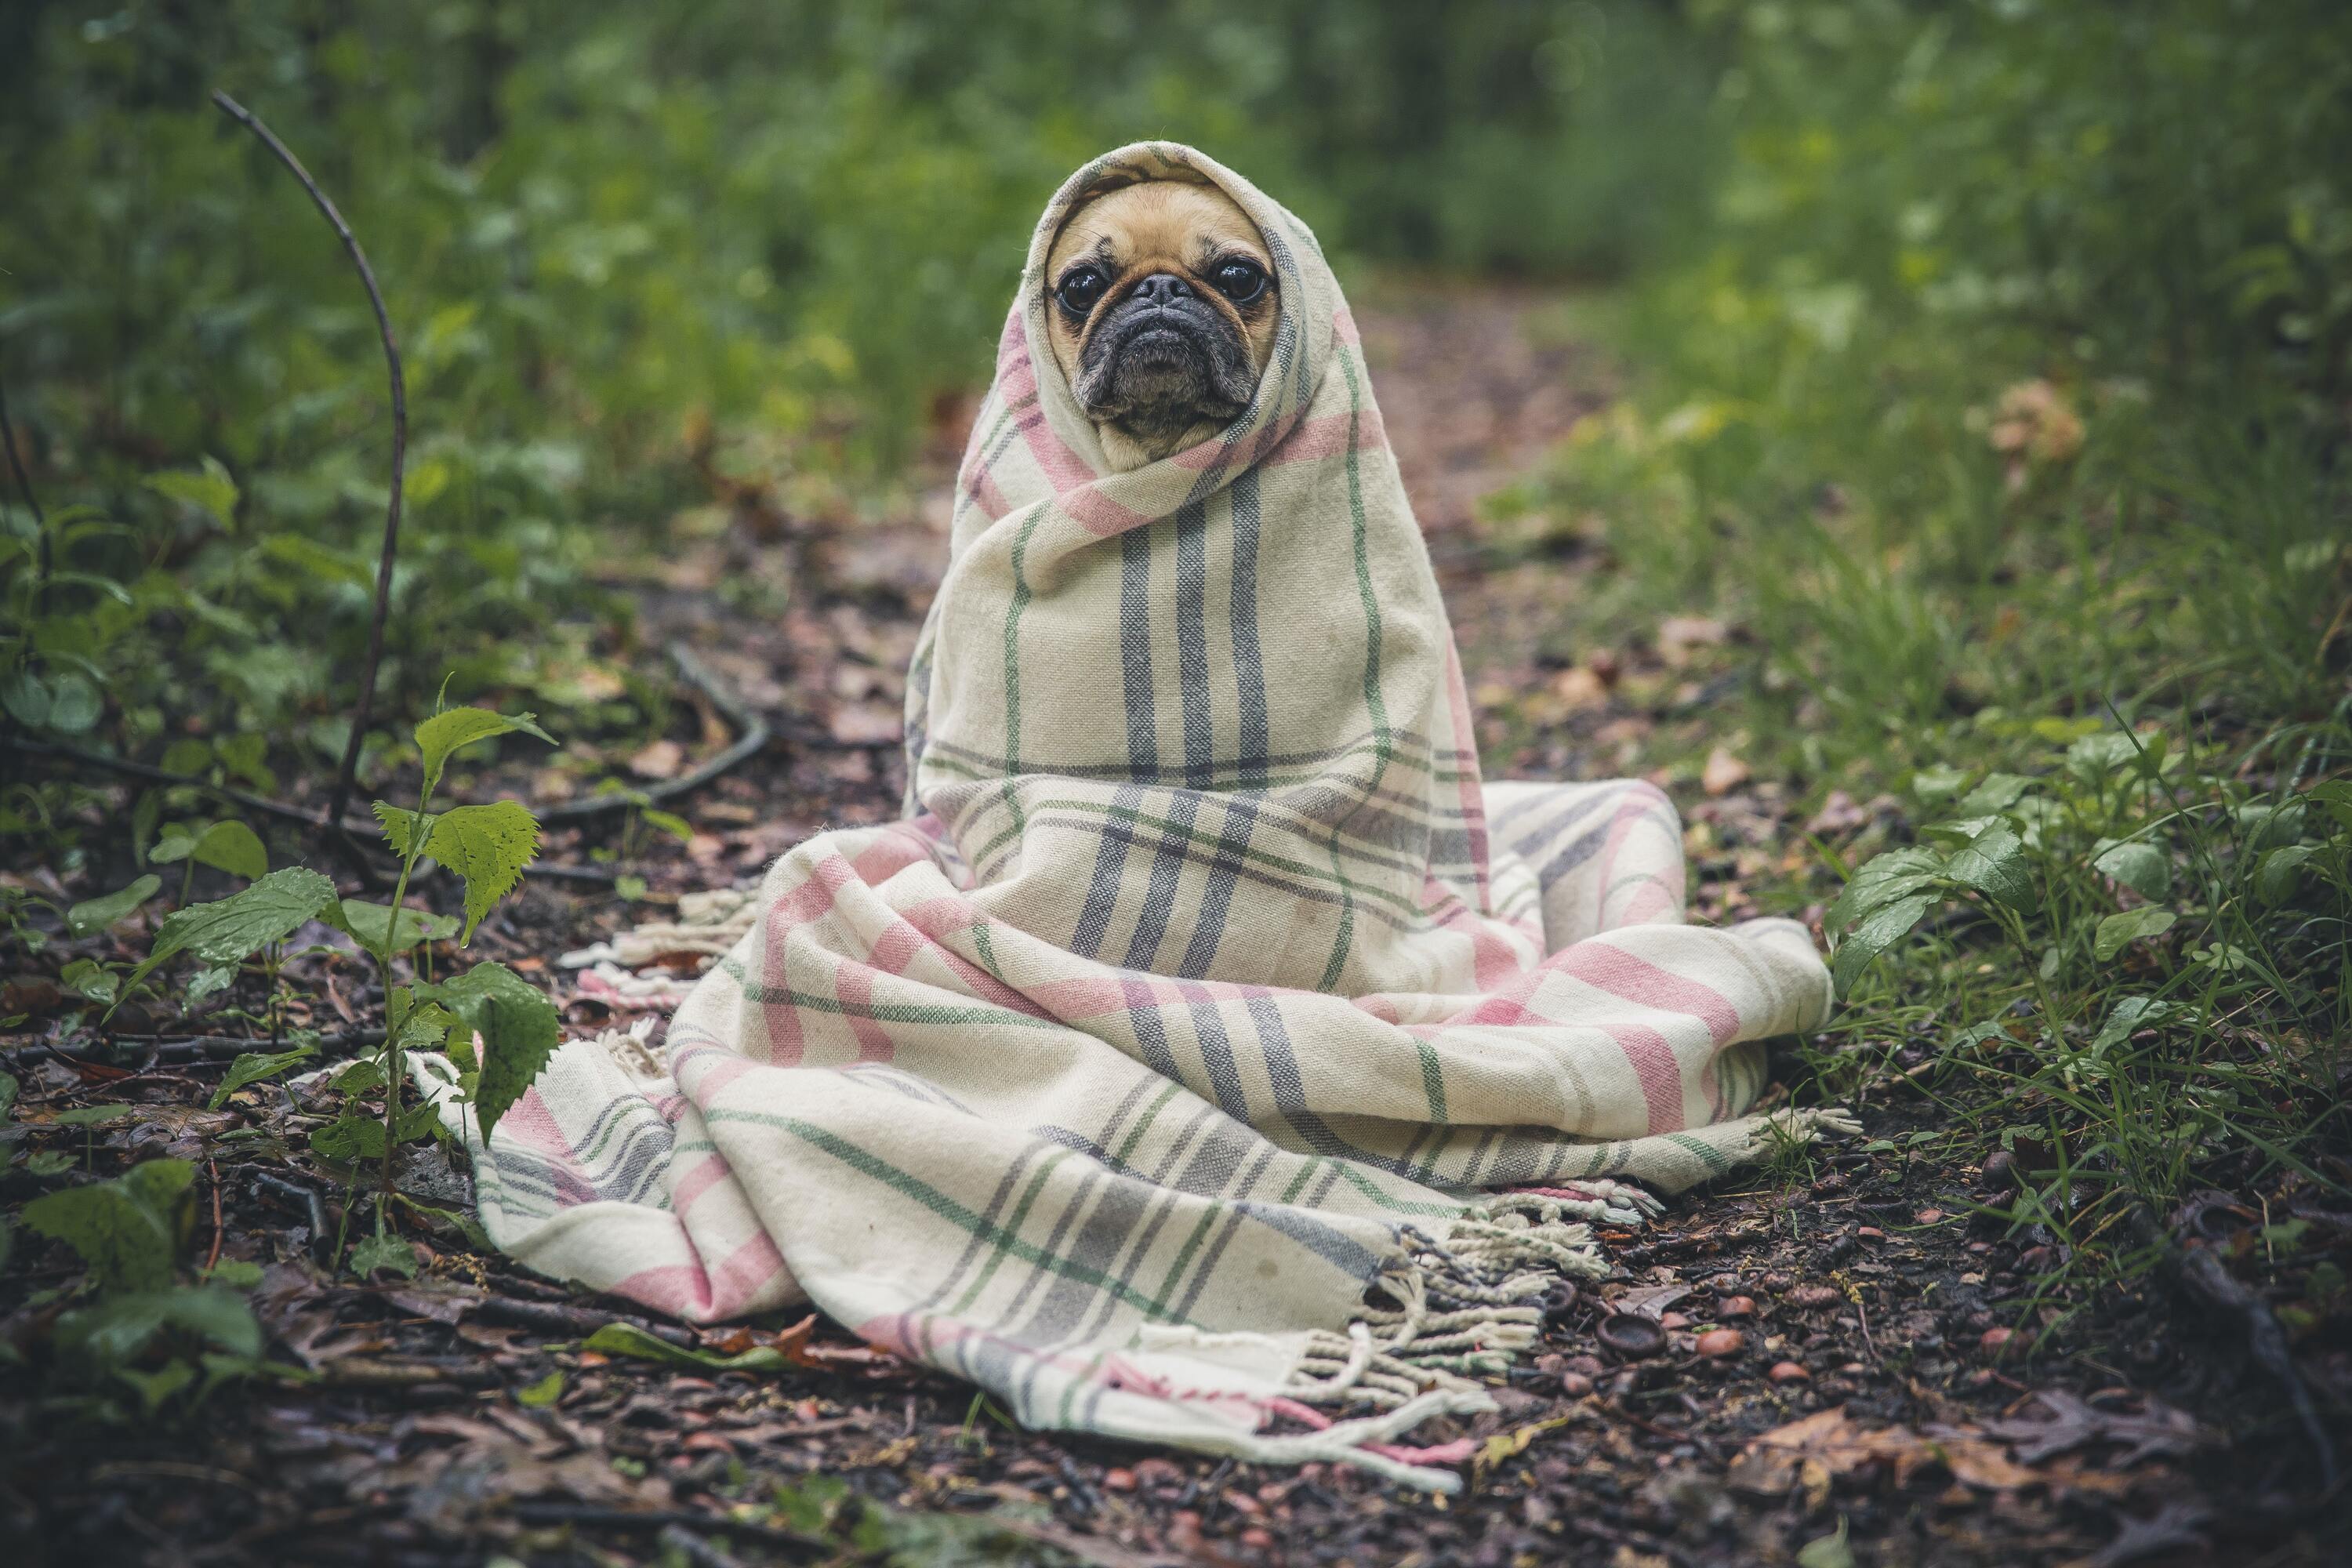 Dog is wrapped in blankets outside in a garden